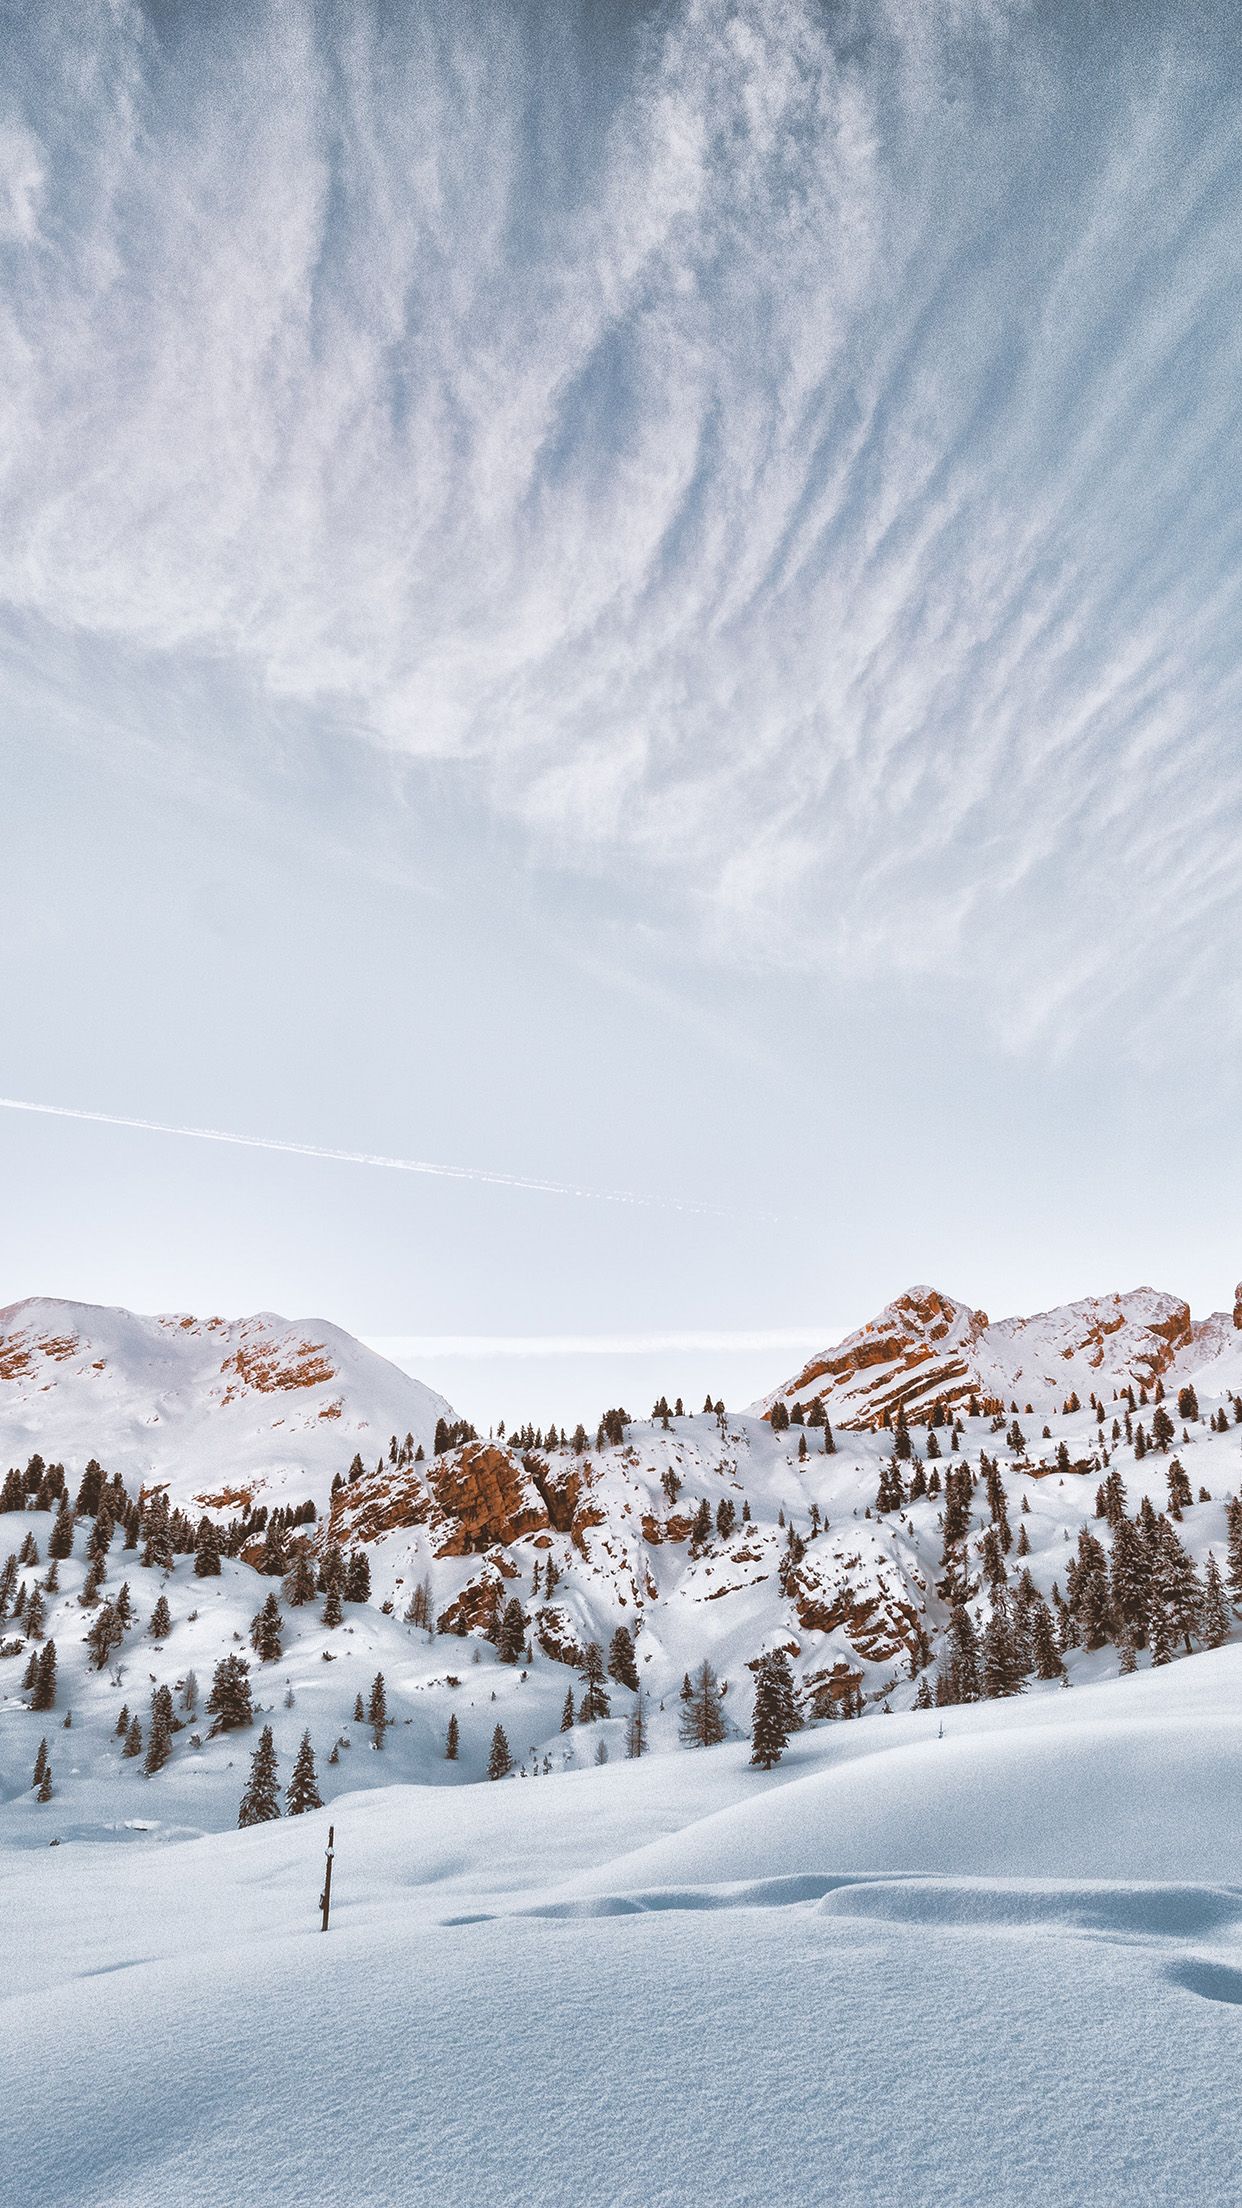 iPhone X wallpaper. snow winter tree sky cloud nature